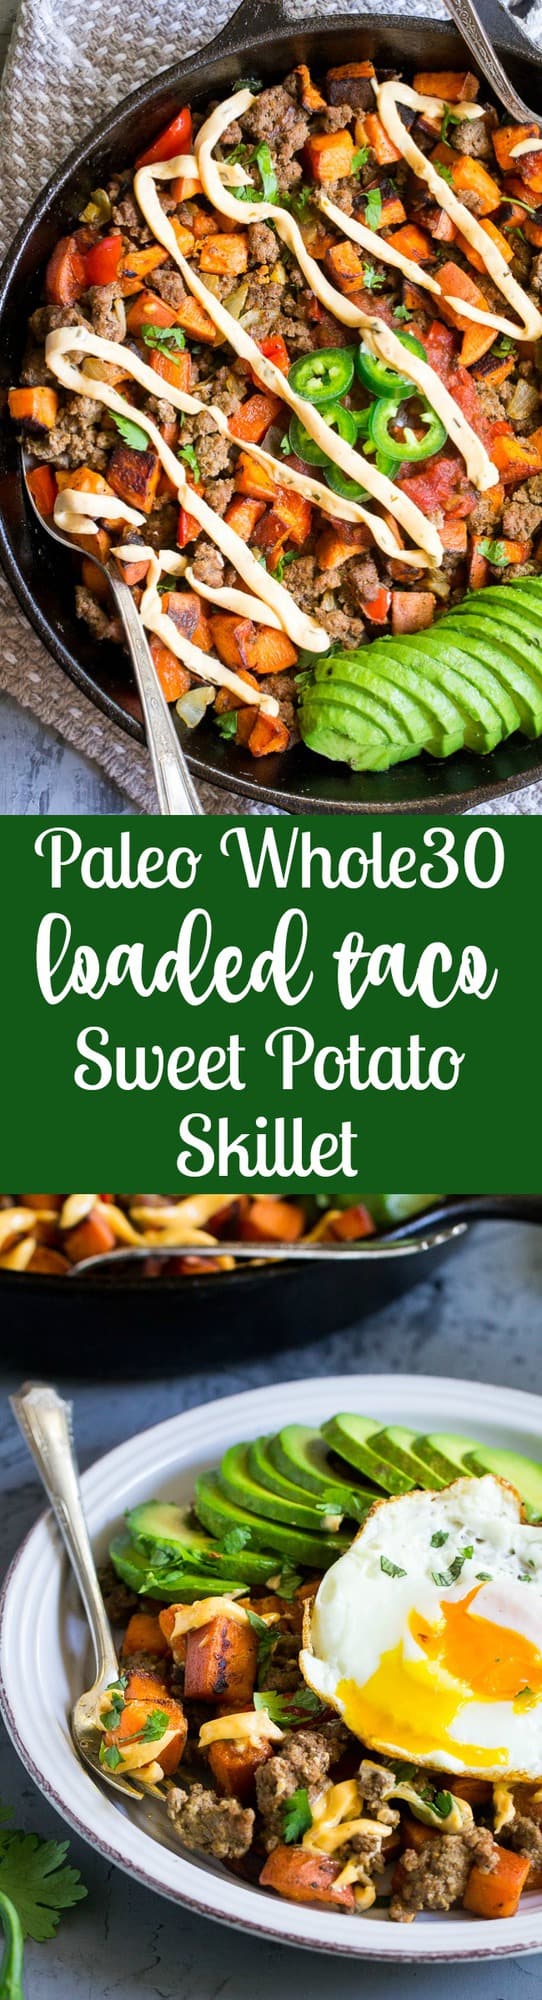 https://www.paleorunningmomma.com/wp-content/uploads/2017/10/loaded-taco-sweet-potato-skillet.jpg